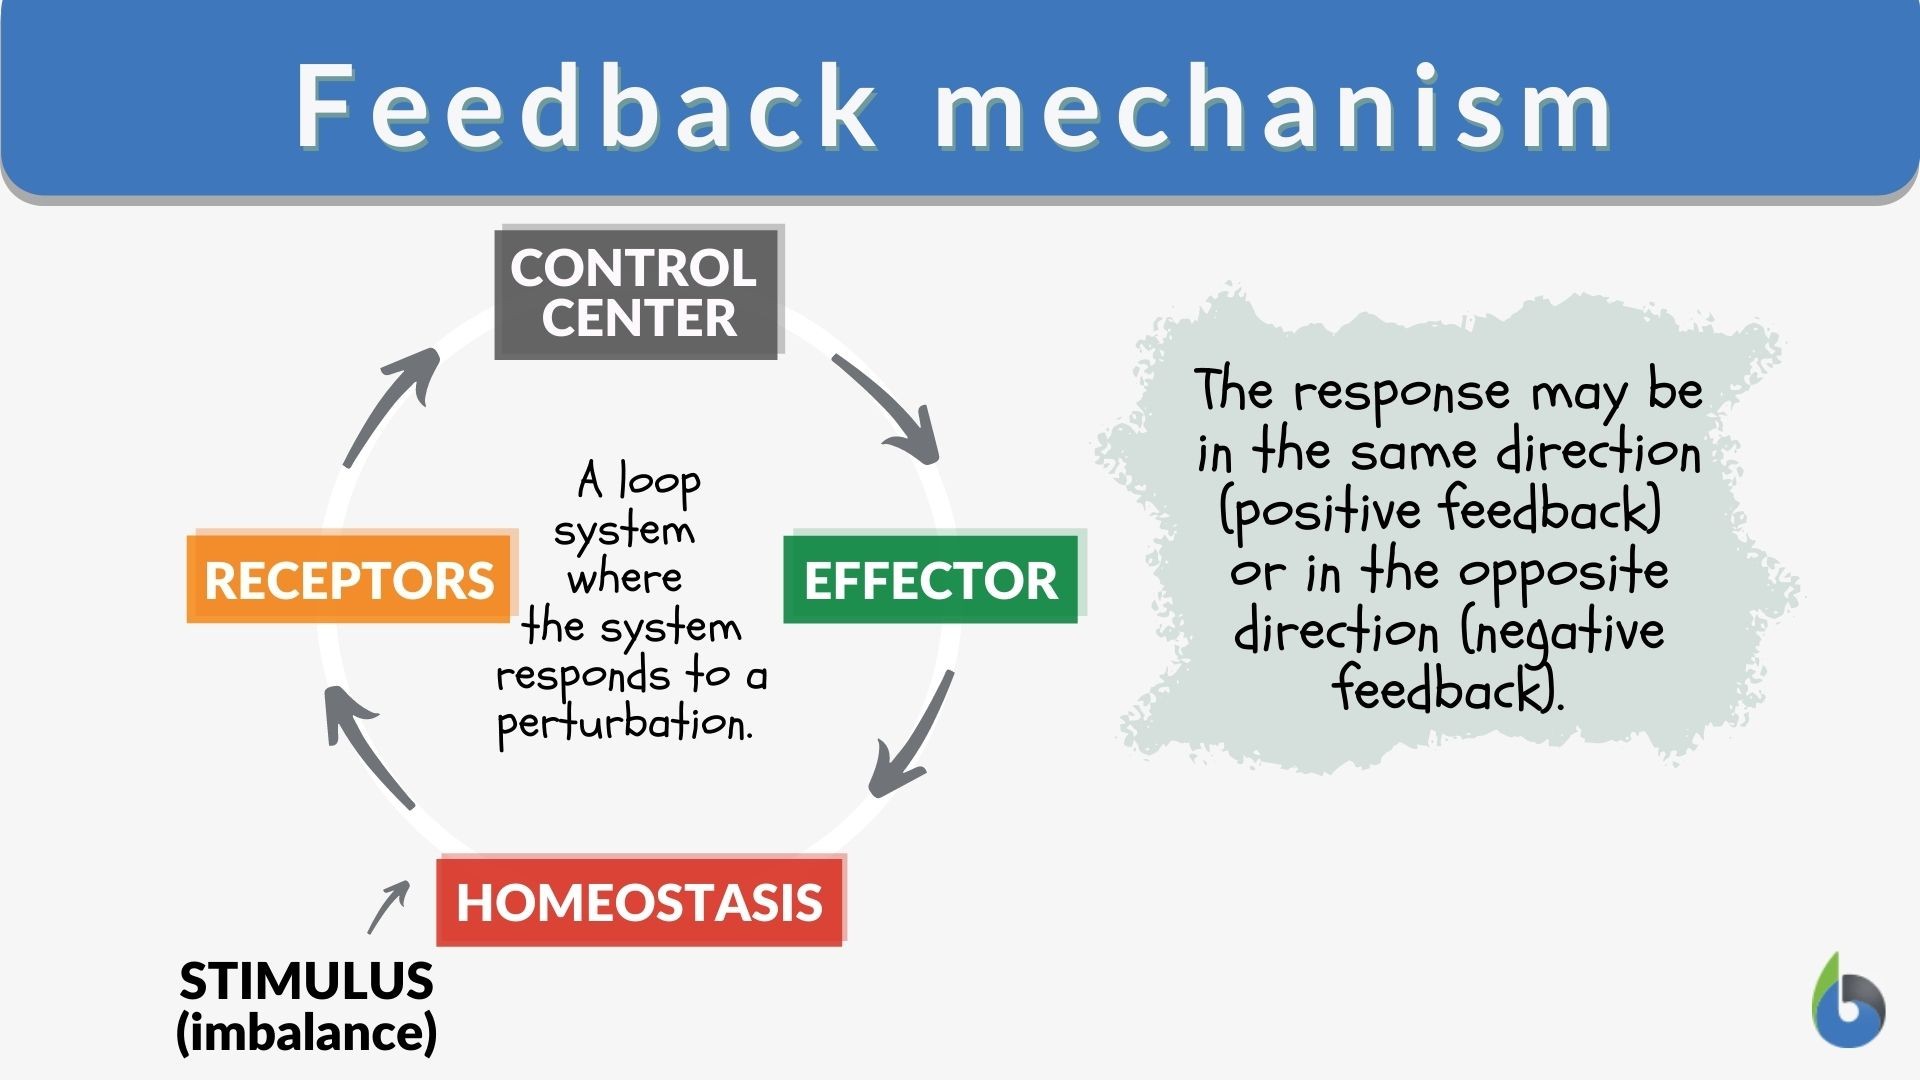 positive feedback mechanism blood clotting